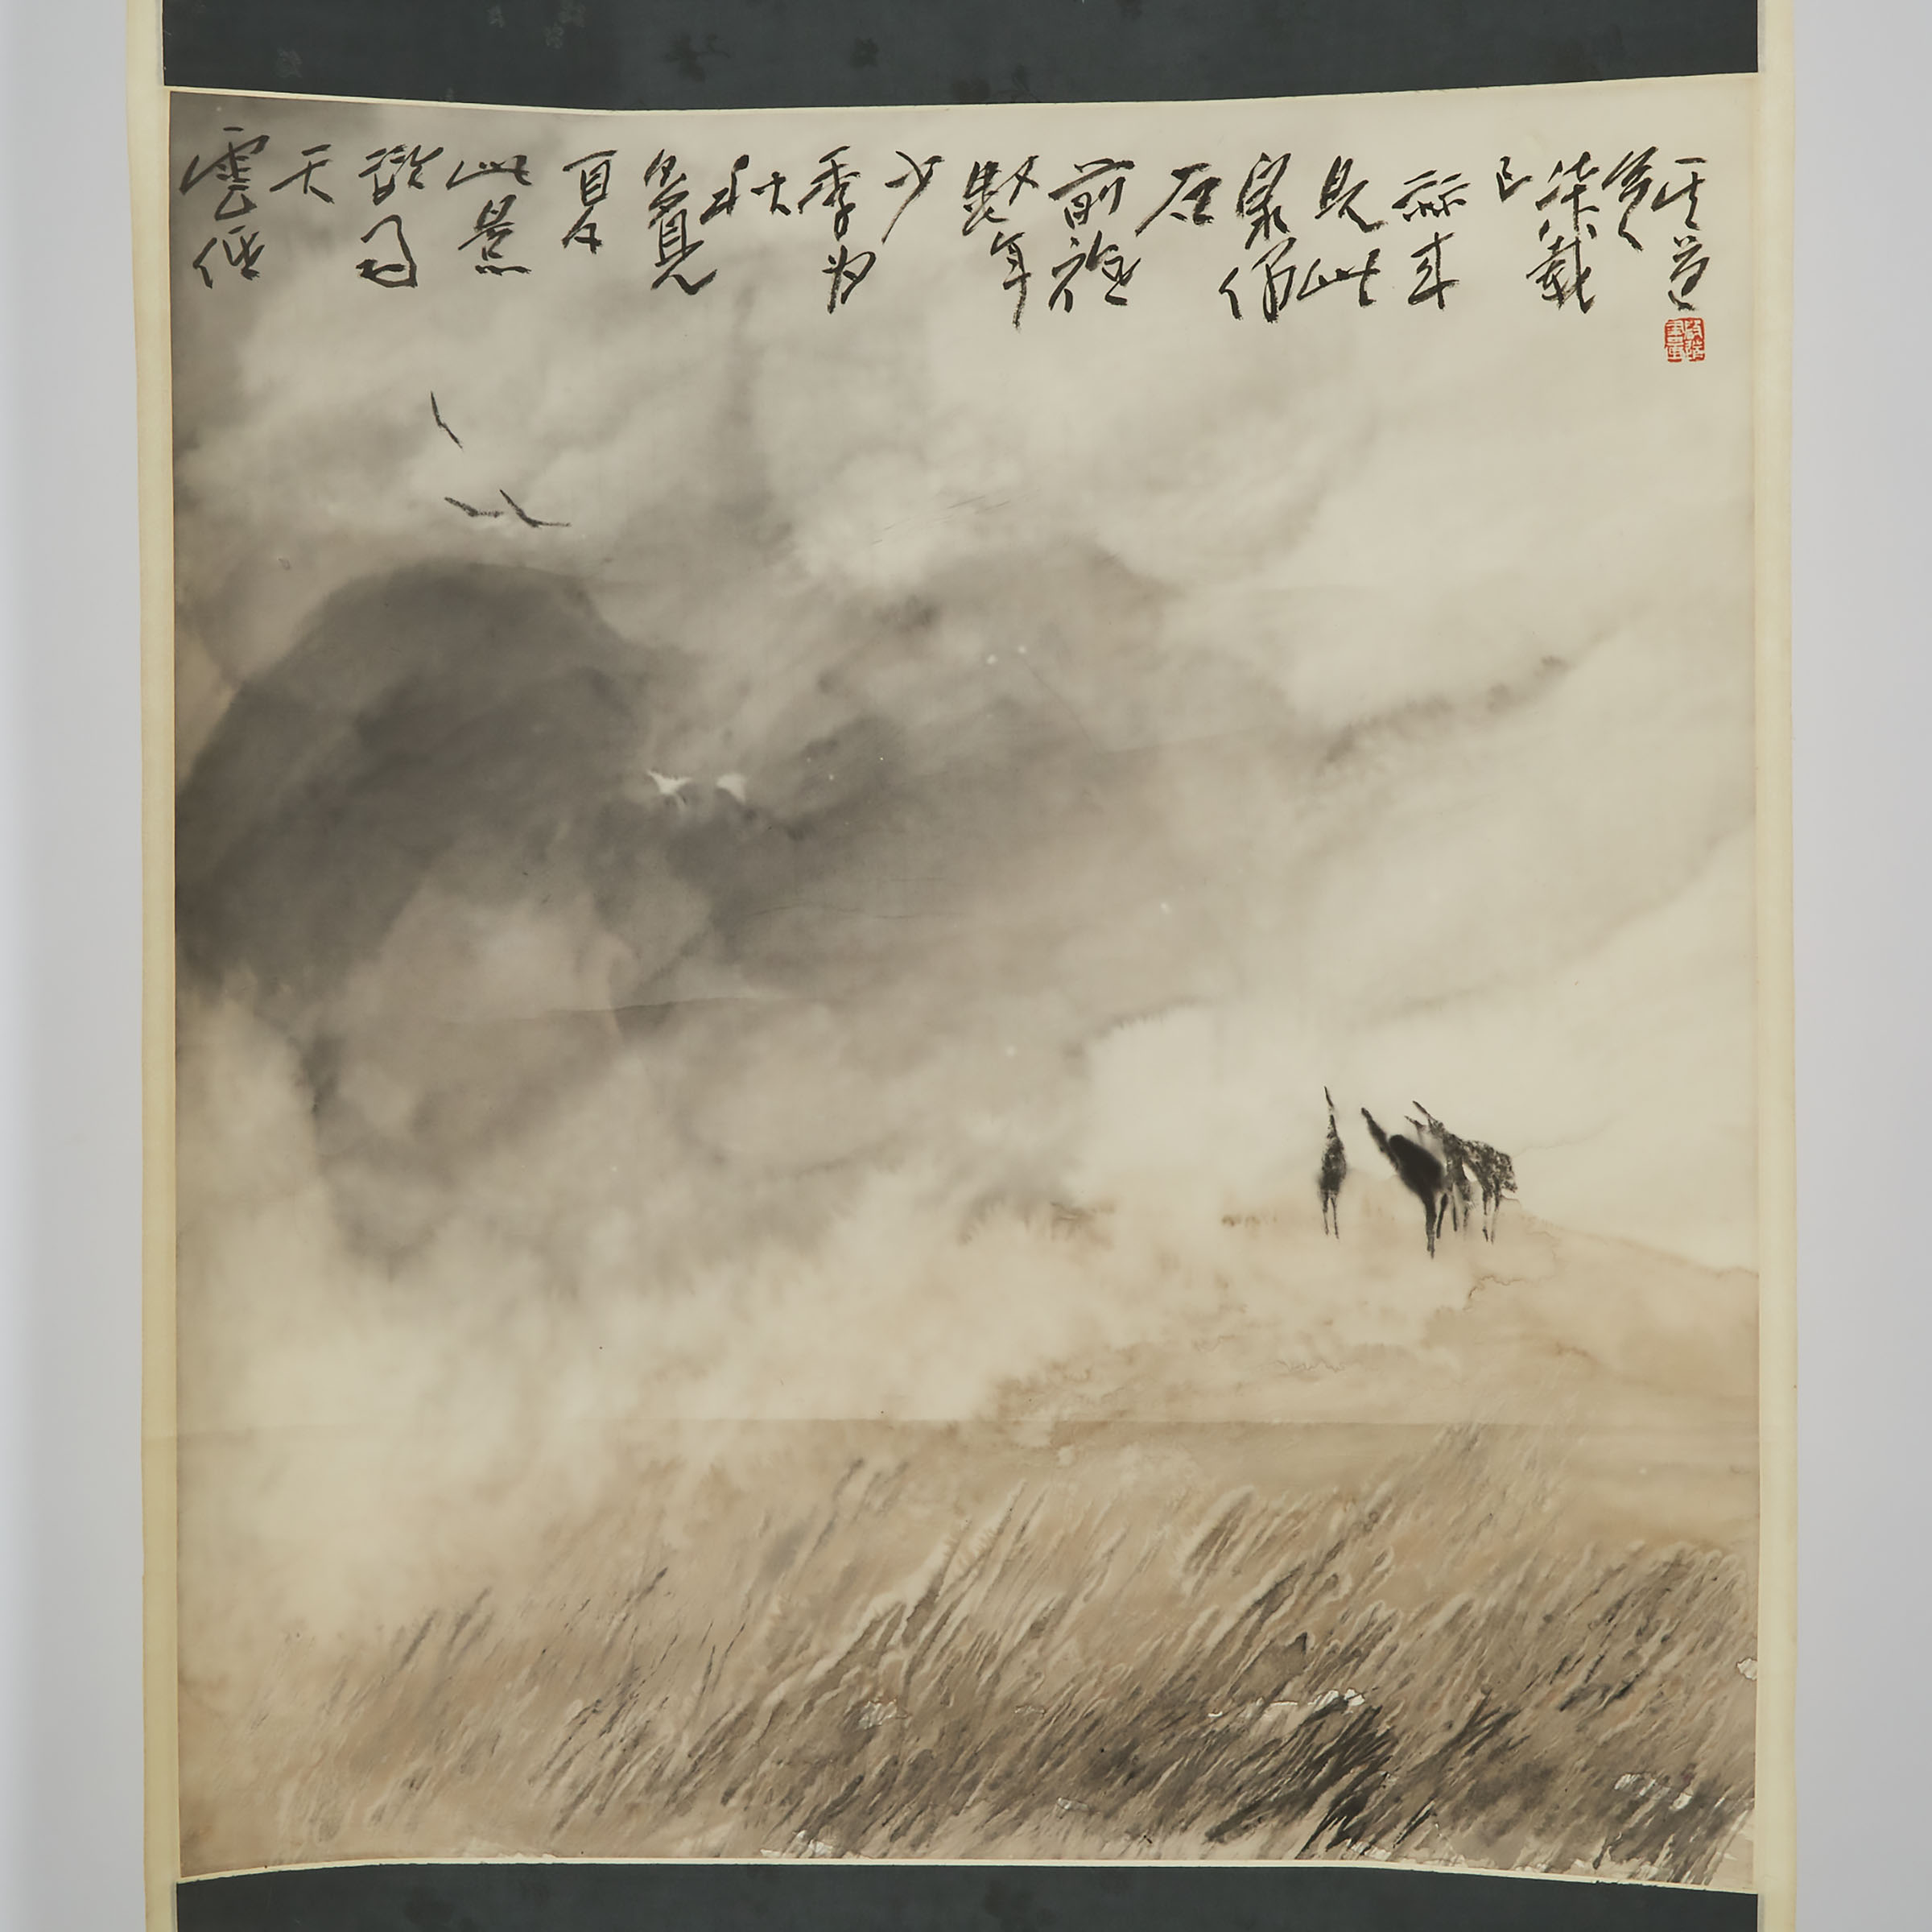 Chen Qidao (1940- ), Landscape with Cranes